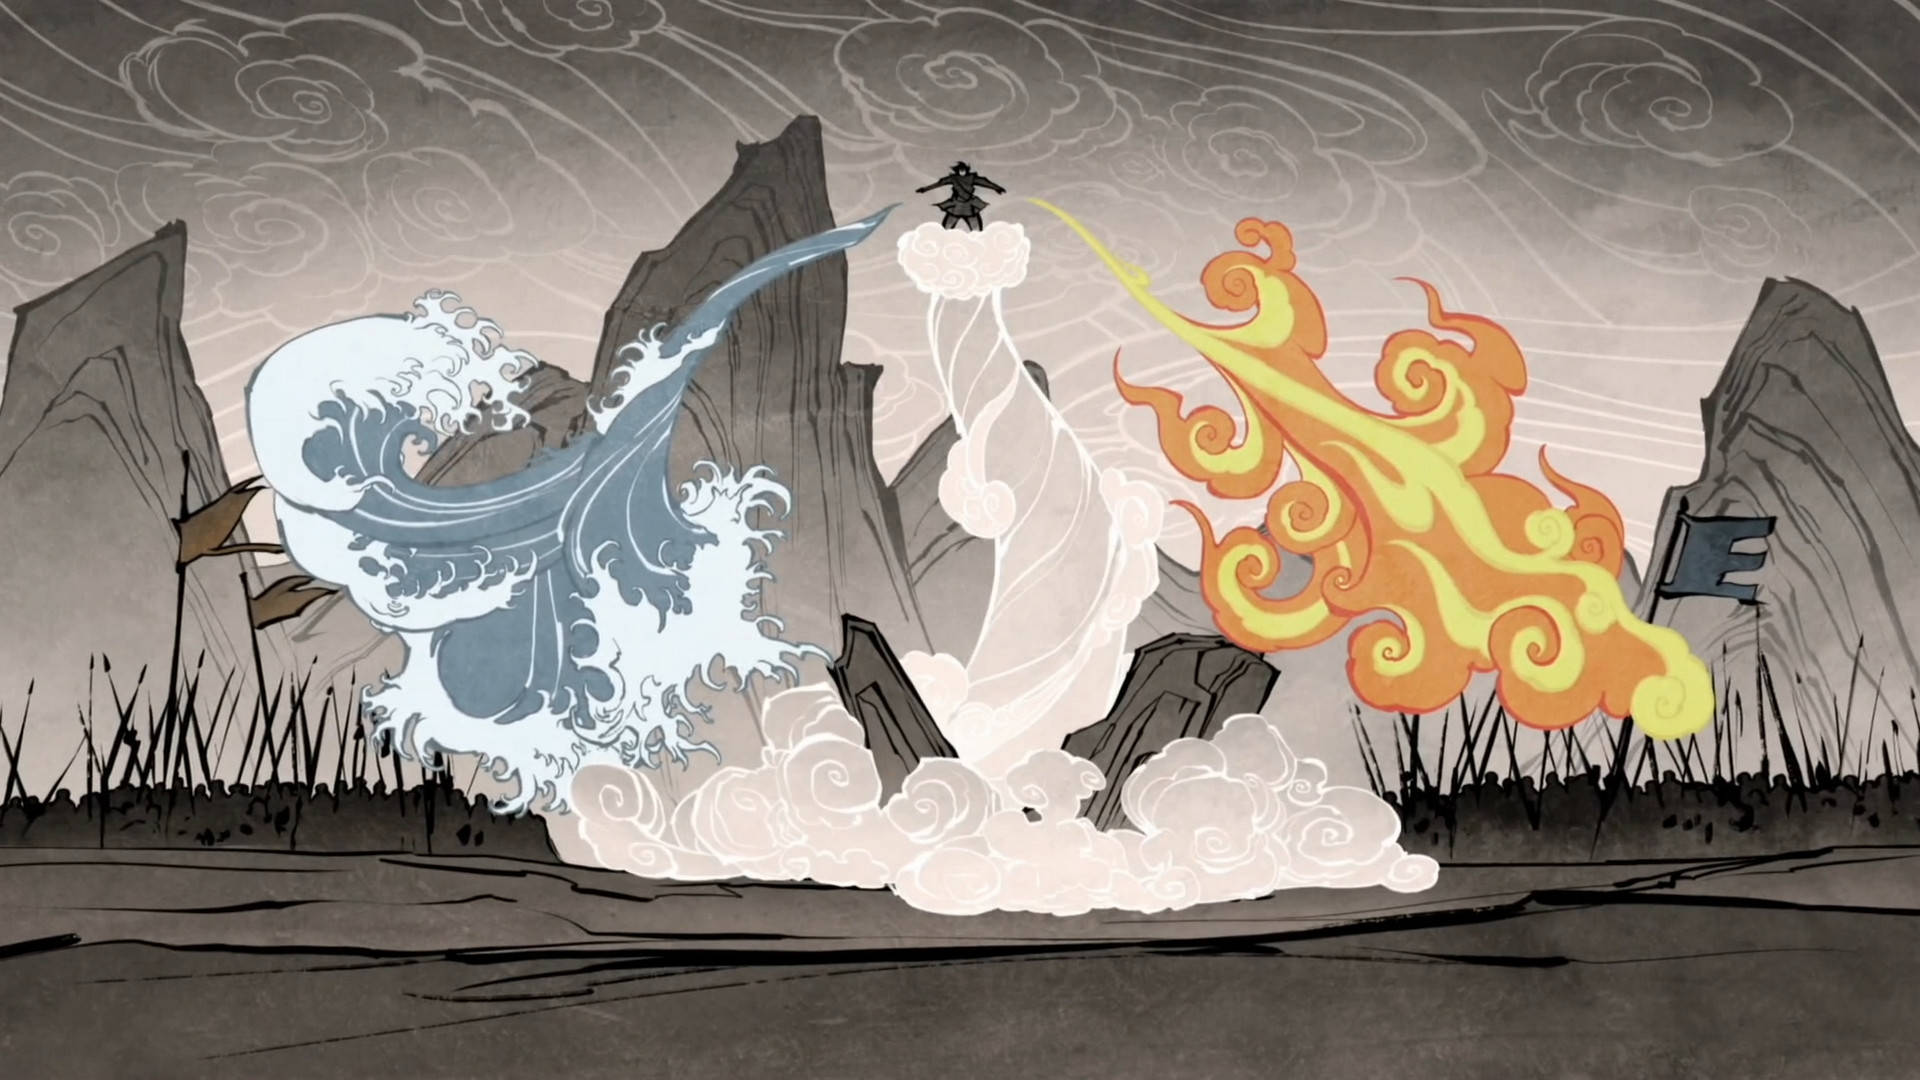 Korra Channels Her Avatar Power in Dramatic Display Wallpaper